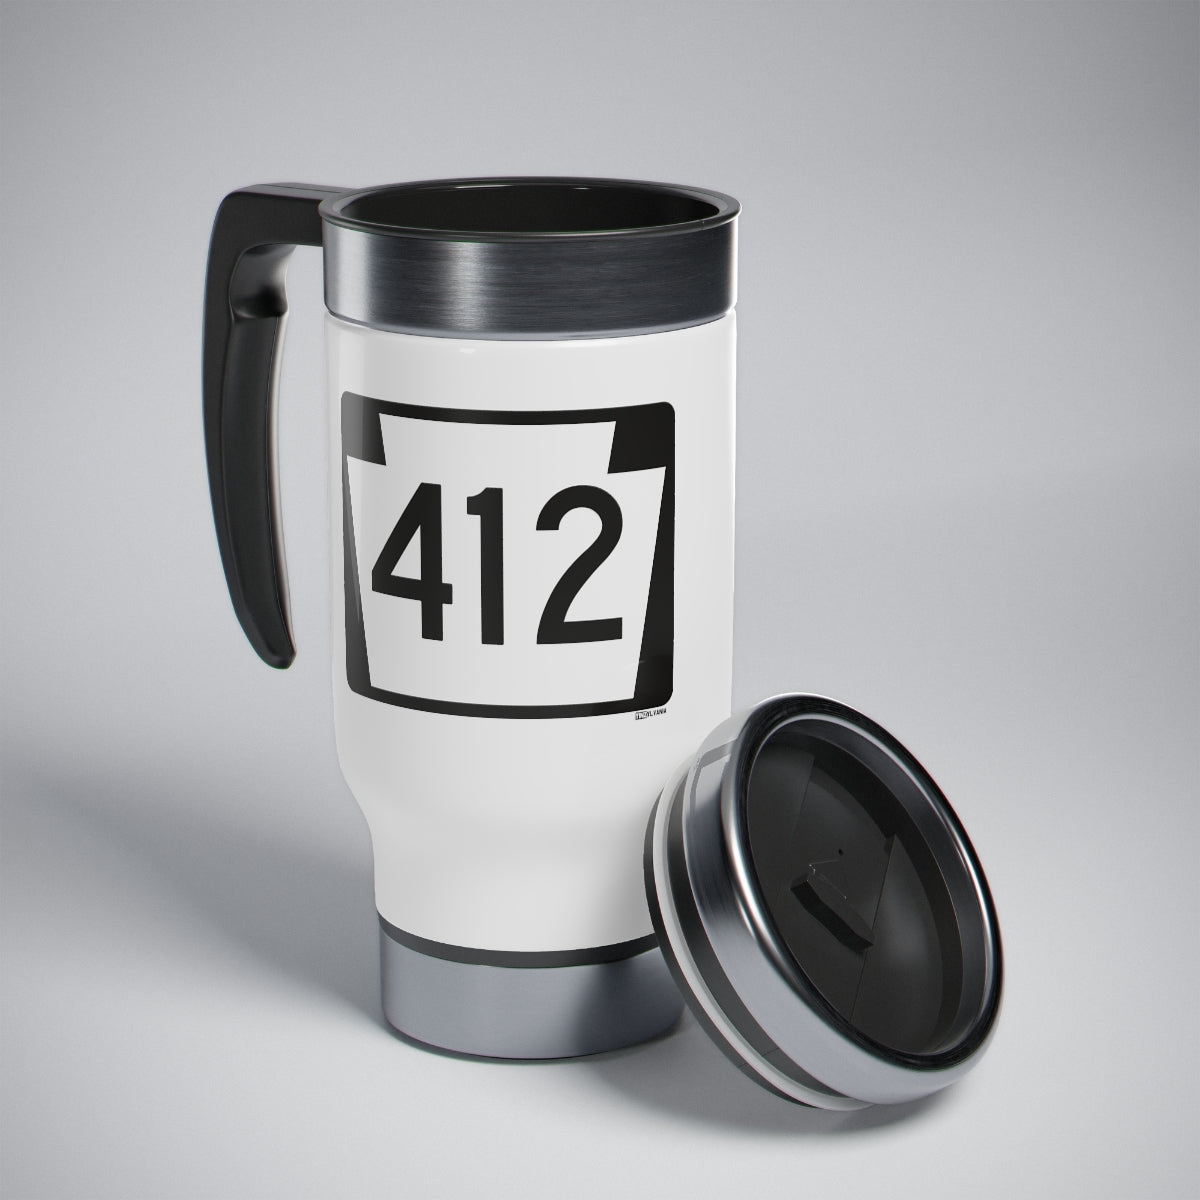 ROAD SIGN 412 - Stainless Steel Travel Mug with Handle, 14oz - Yinzylvania